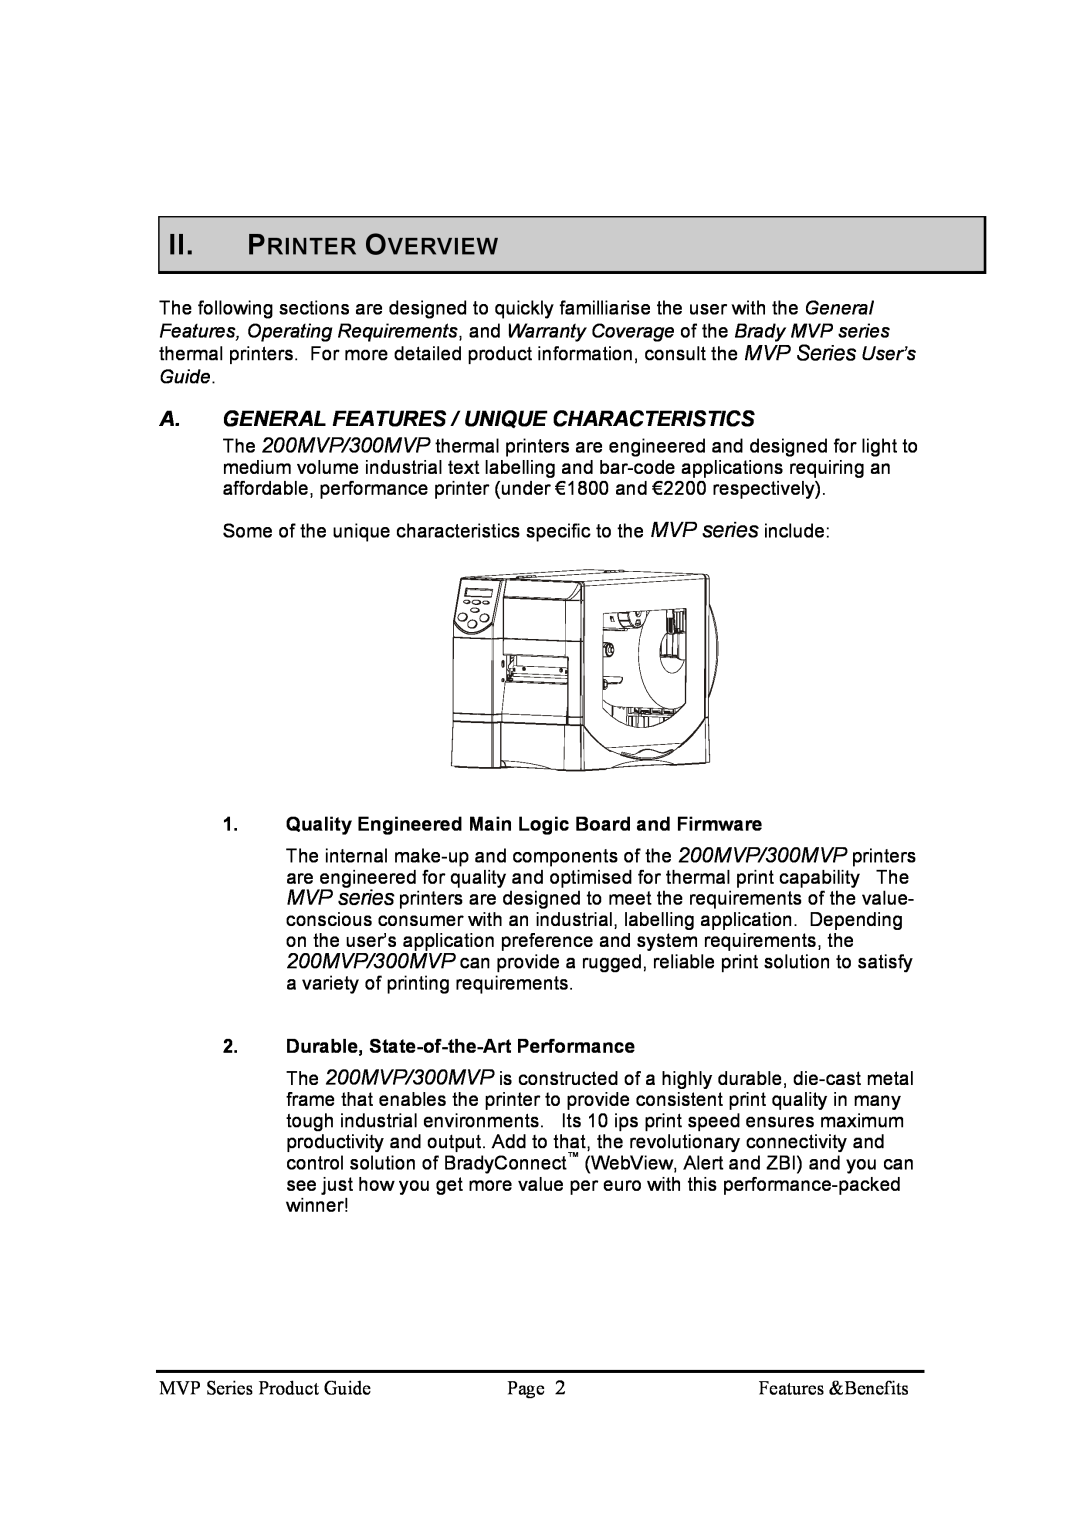 Brady 200MVP, 300MVP manual Ii. Printer Overview, A. General Features / Unique Characteristics 